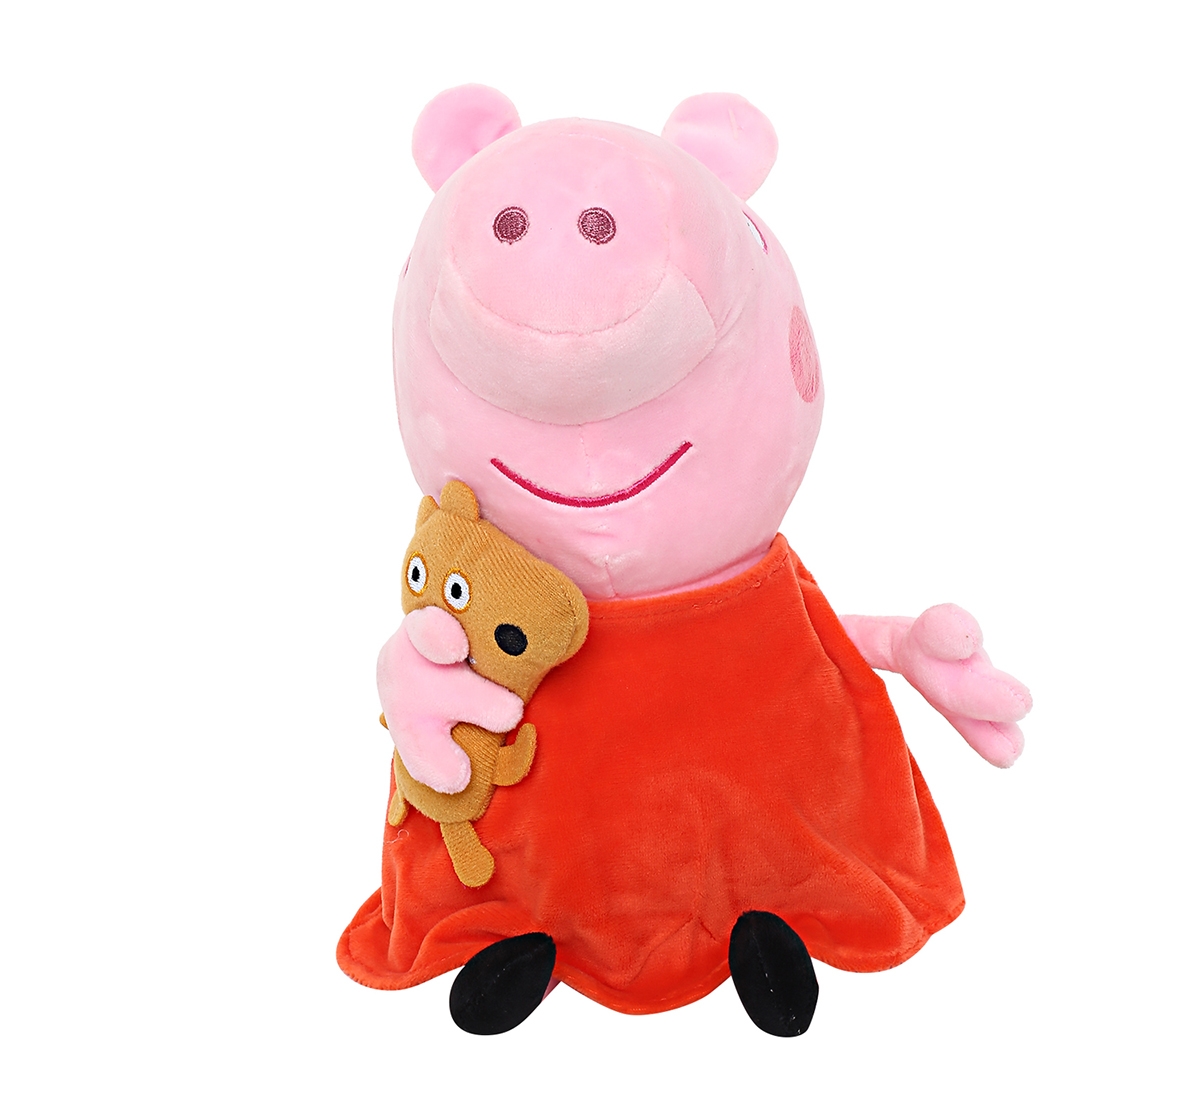 Peppa Pig | Peppa Pig with Bear 30 Cm Soft Toy for Kids age 2Y+ (Orange)